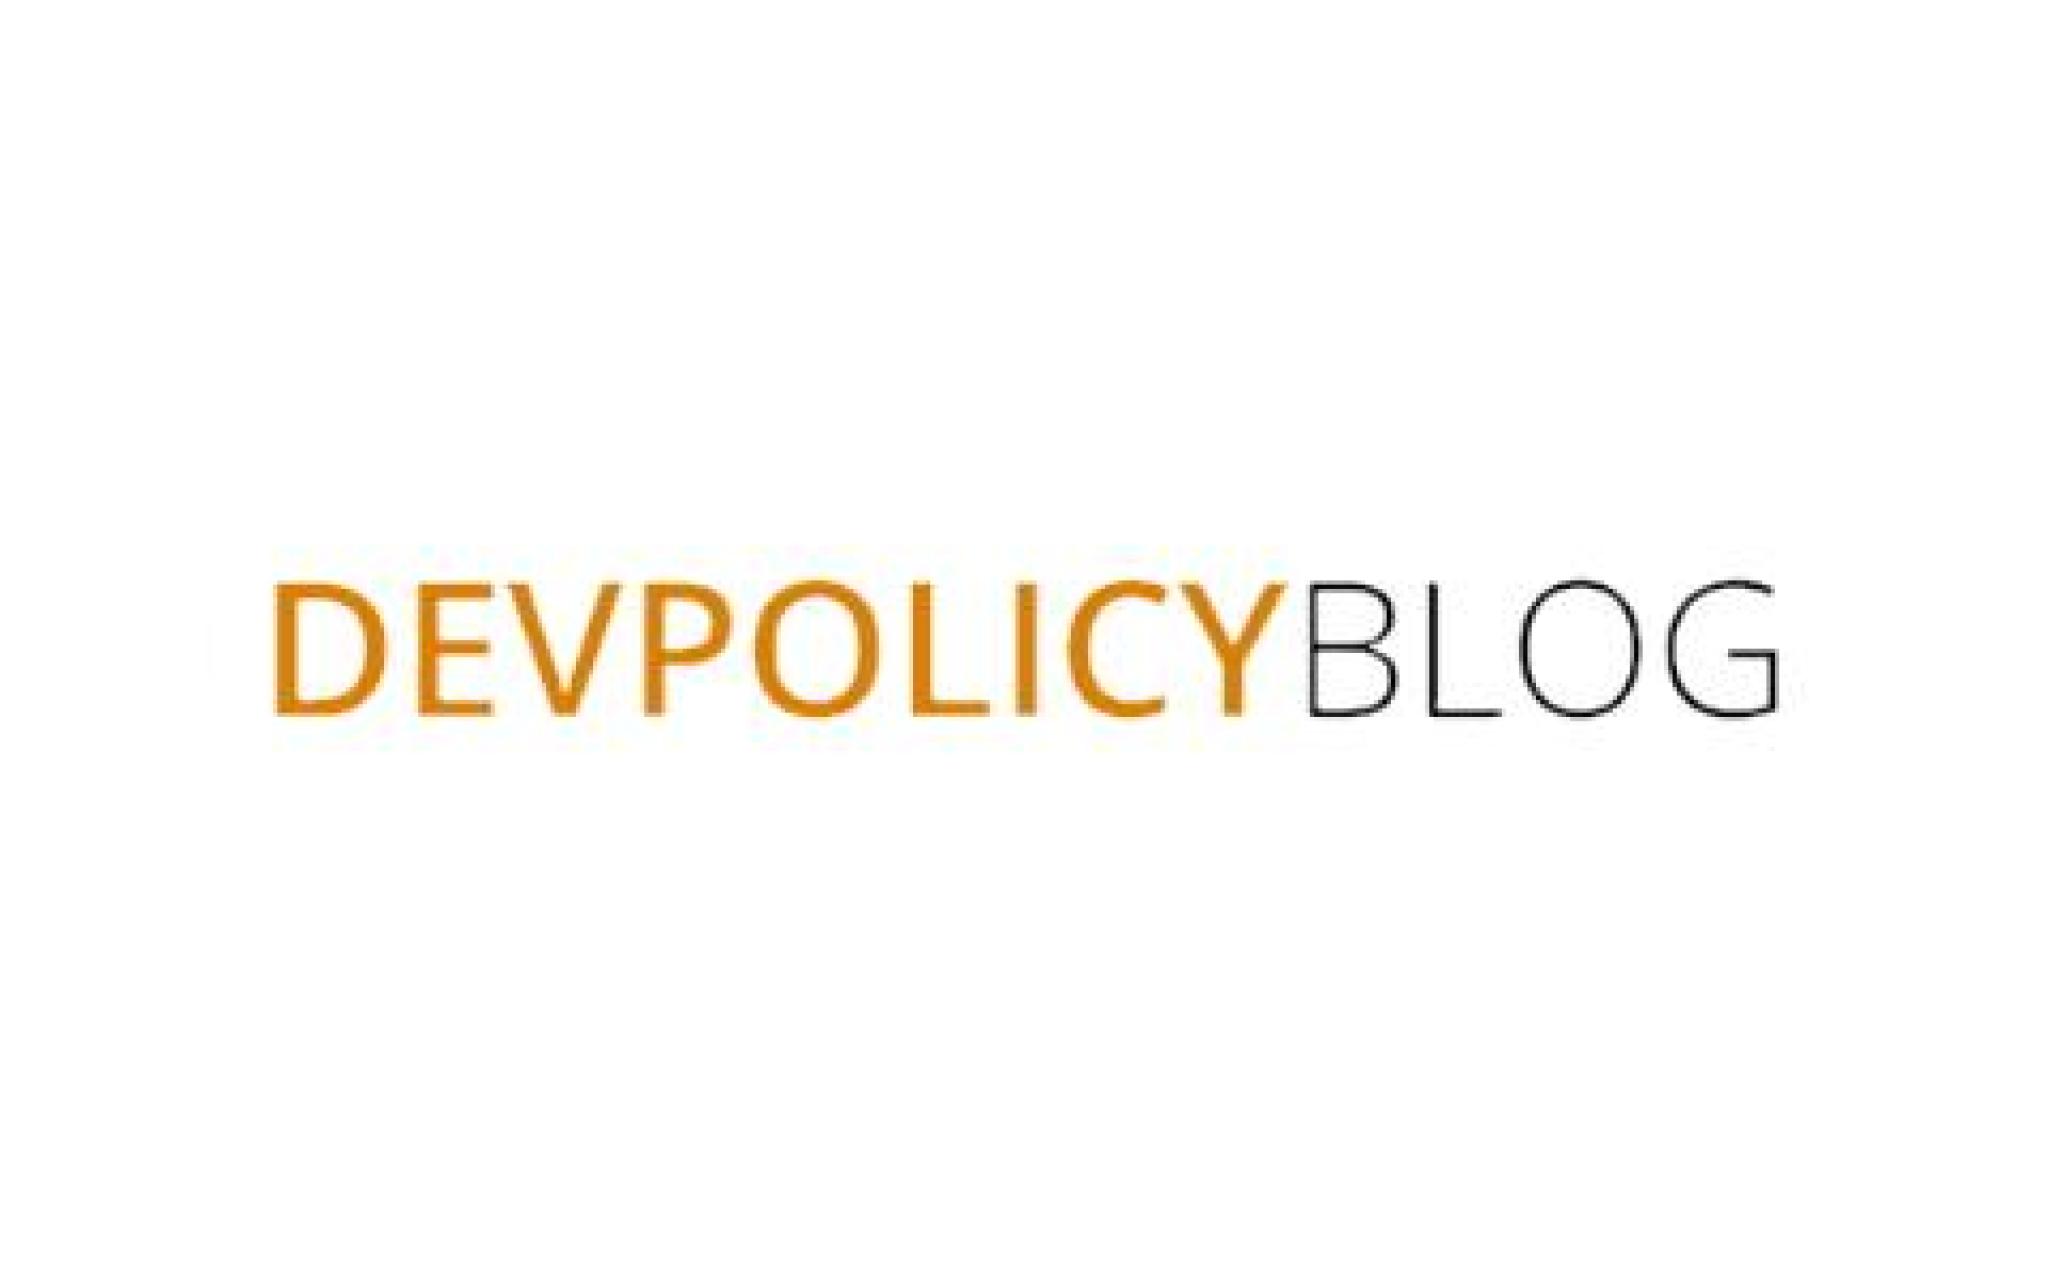 DevPolicy Blog Banner